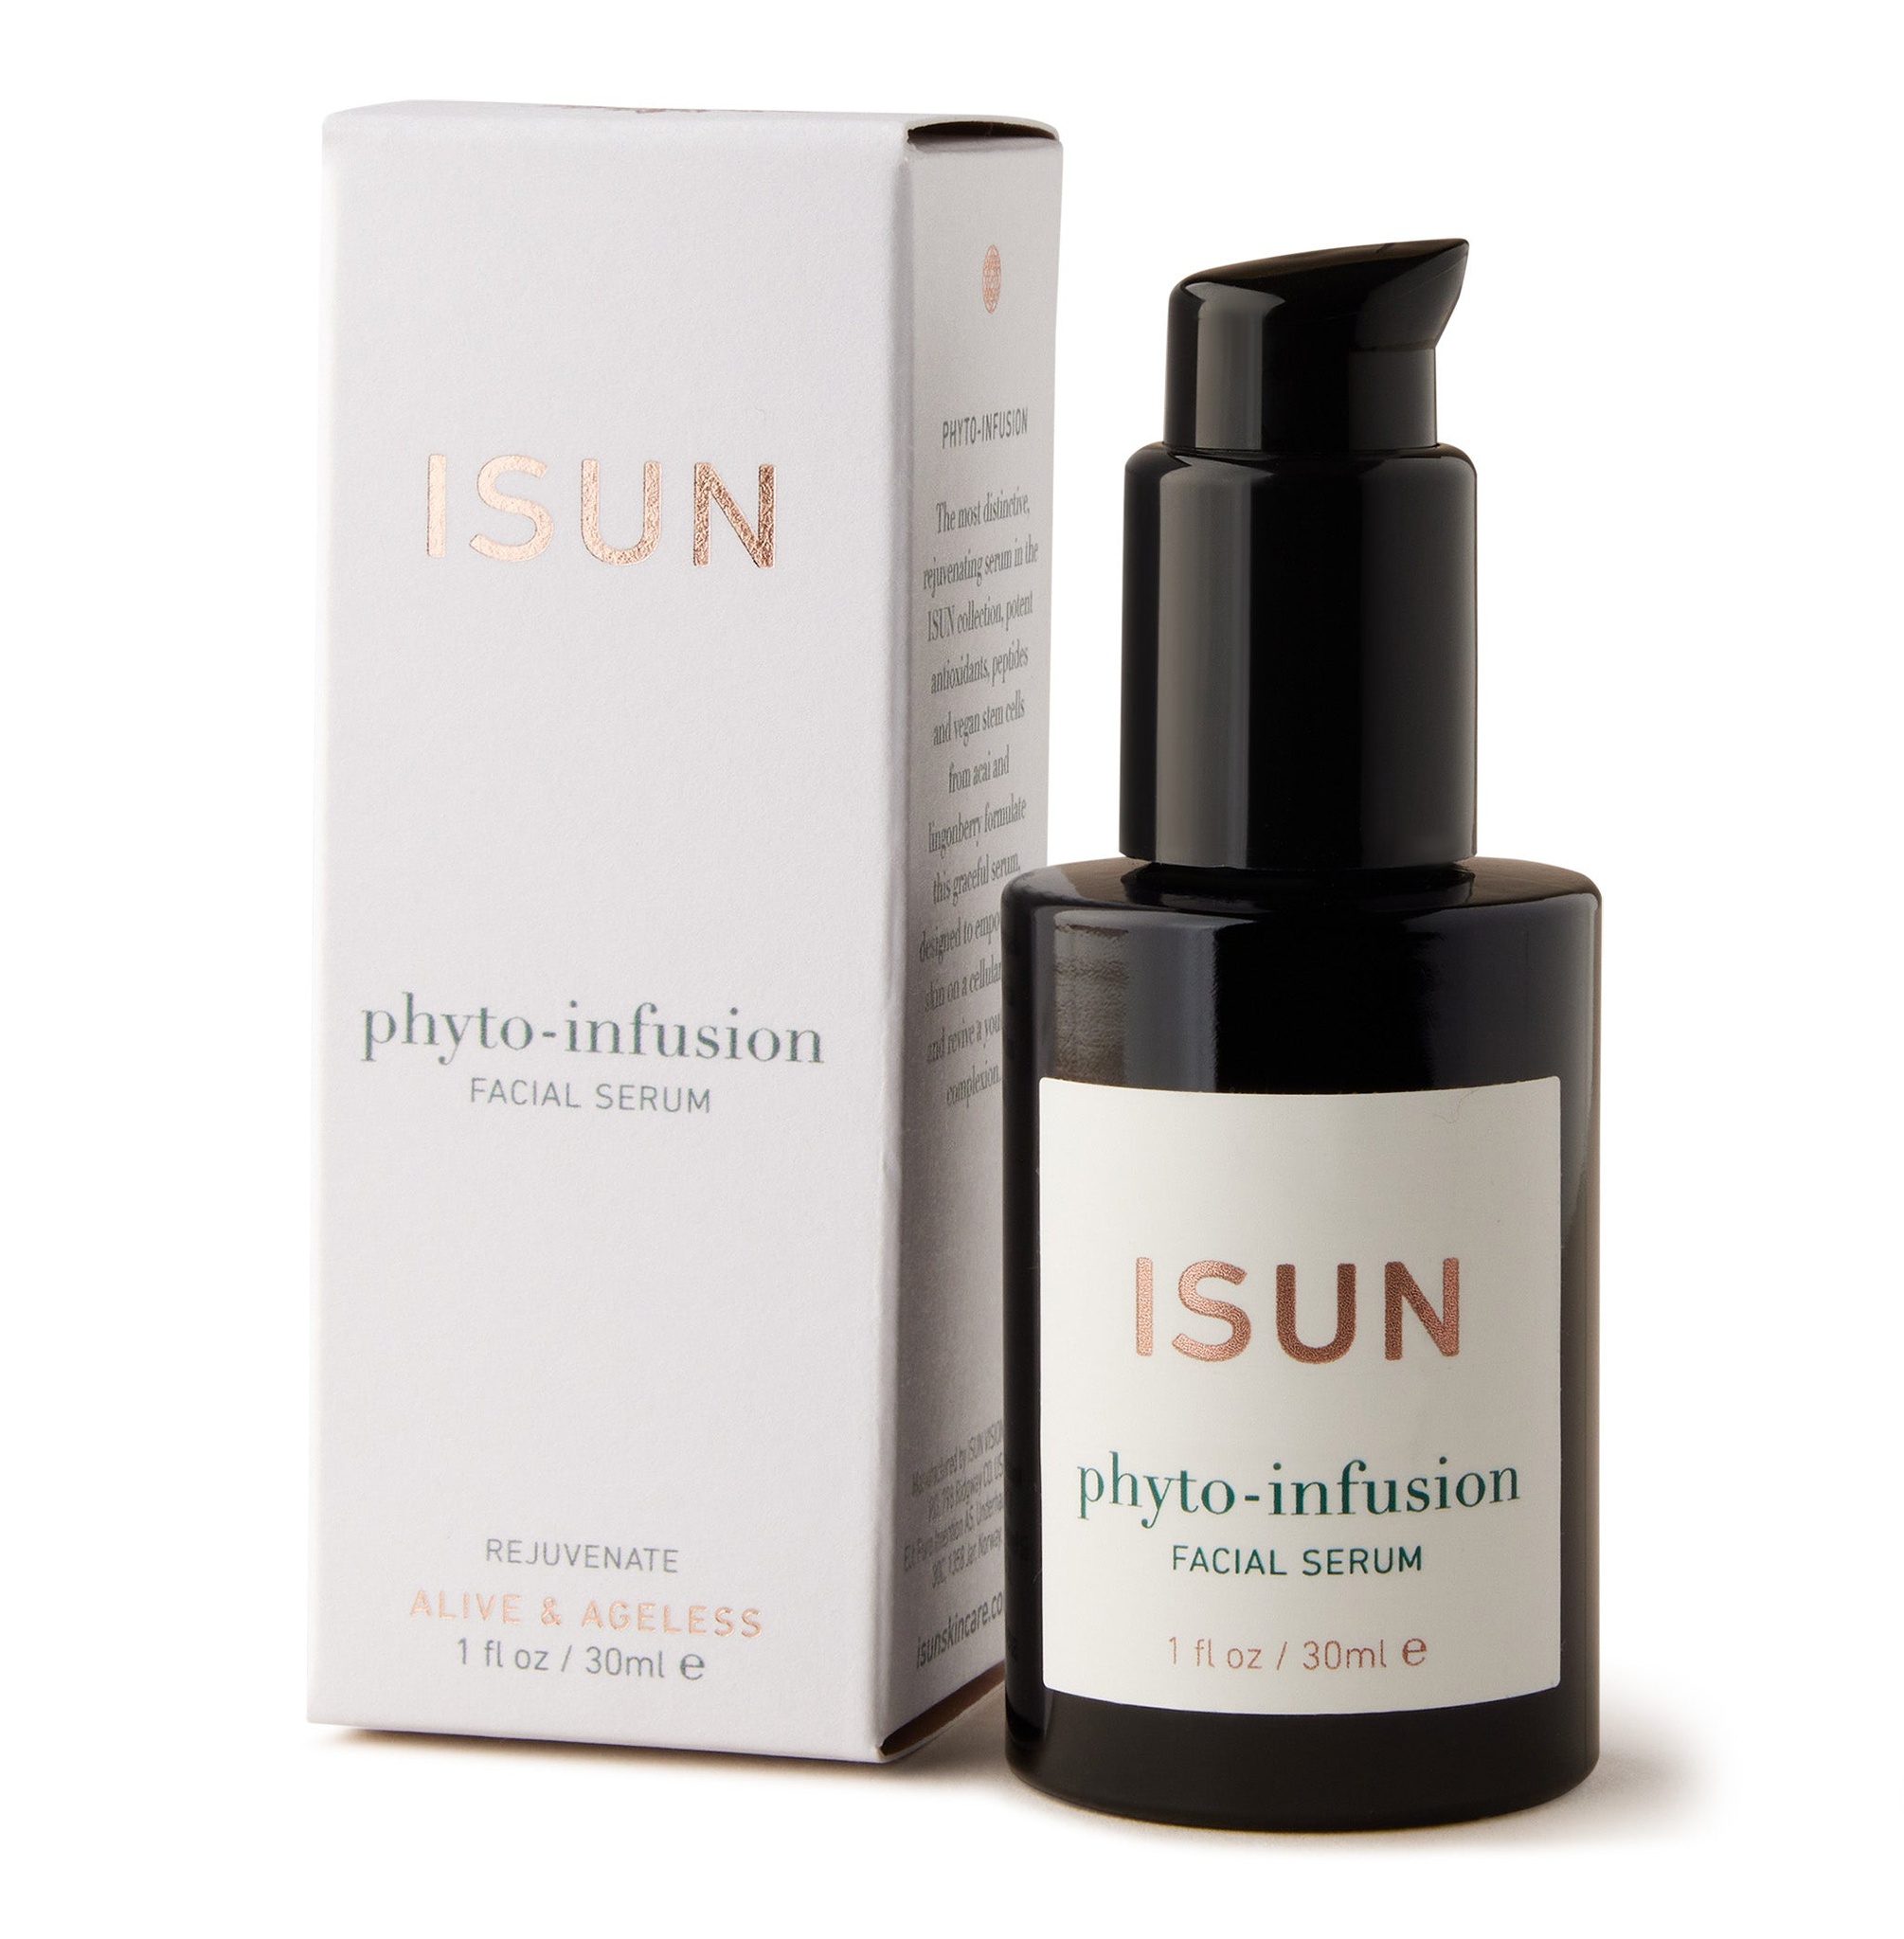 ISUN Phyto-infusion / Facial Serum